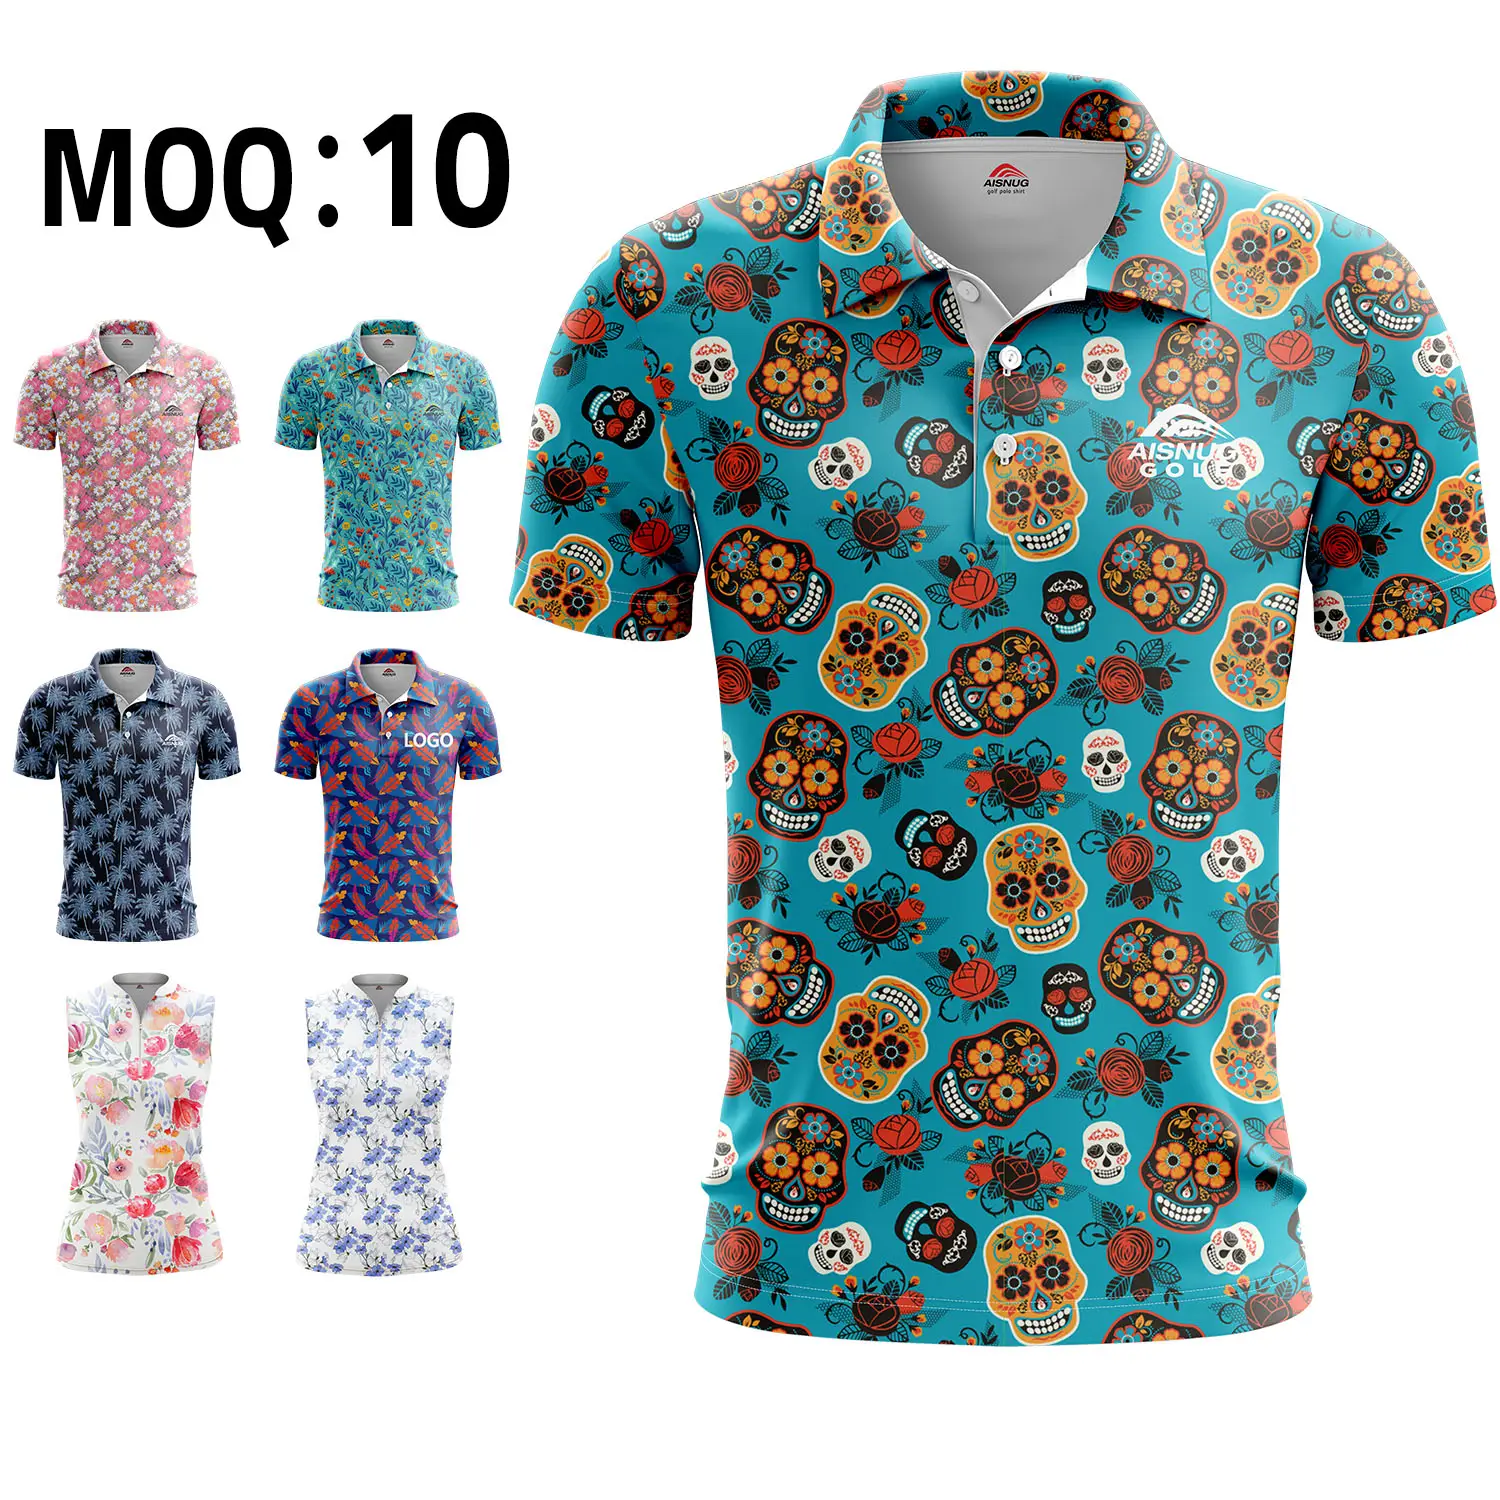 Wholesale Custom Dye Sublimation printing golf shirt men apparel design golf clothing brands